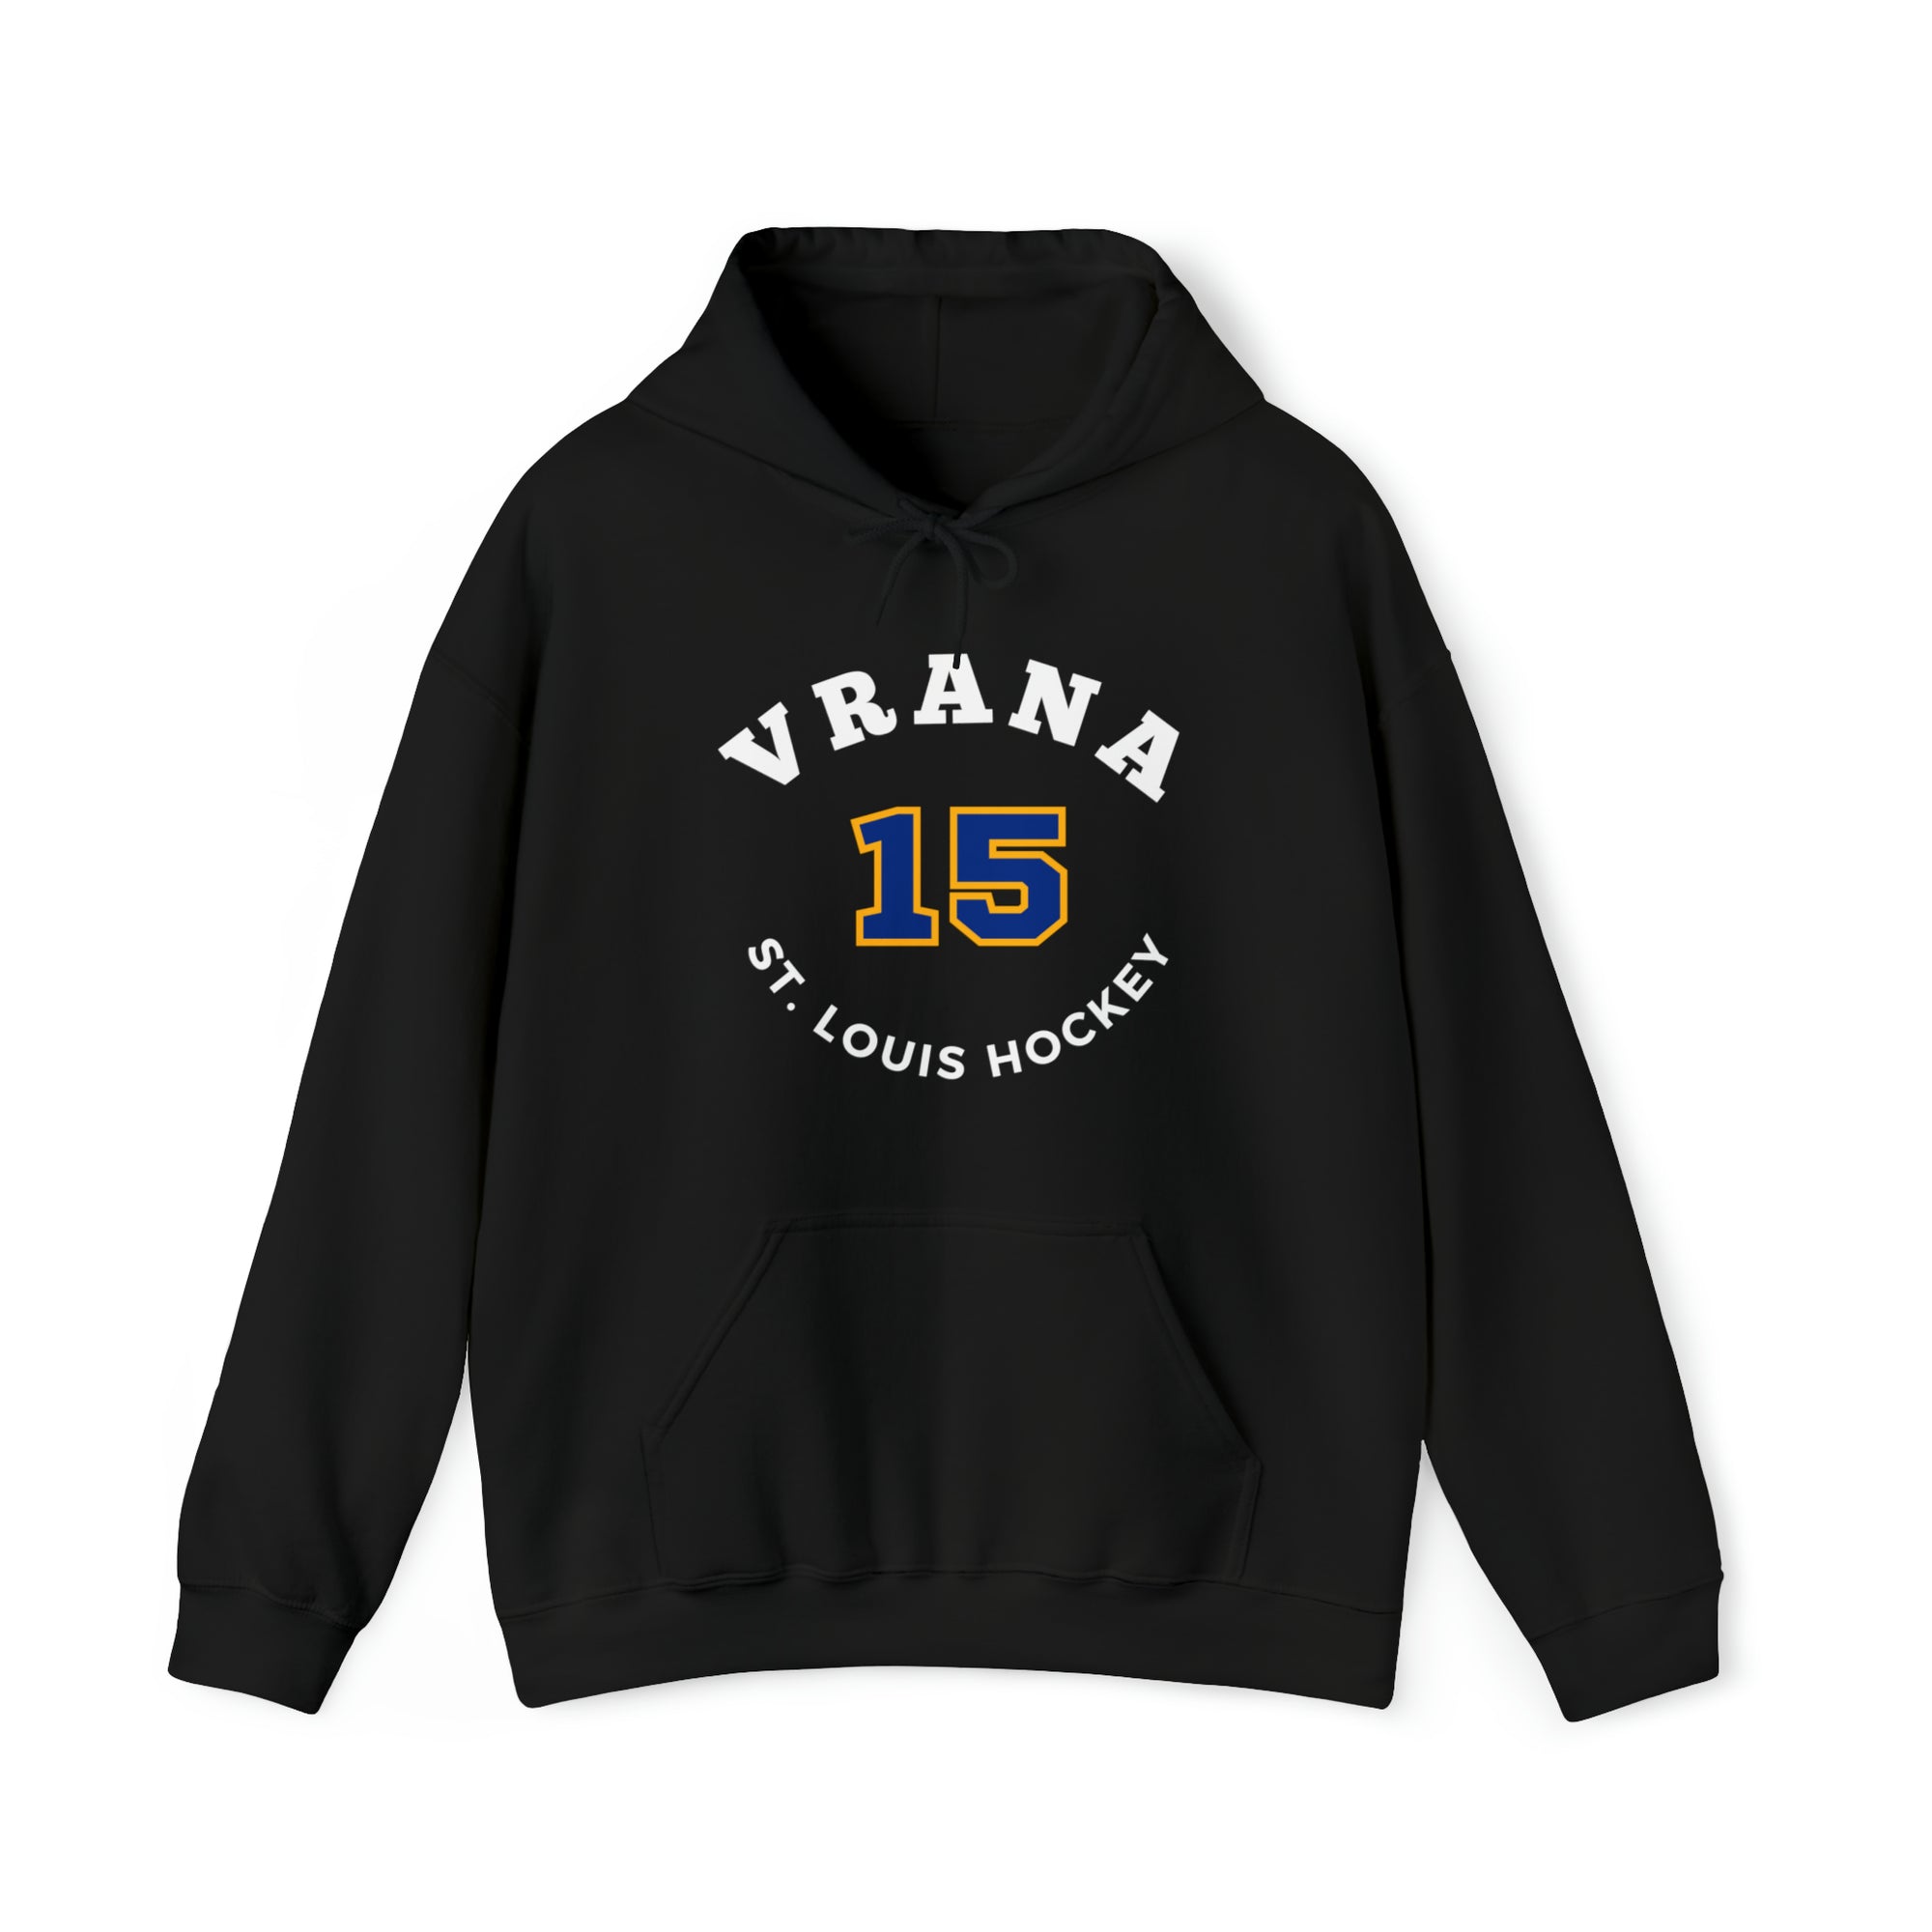 Vrana 15 St. Louis Hockey Number Arch Design Unisex Hooded Sweatshirt